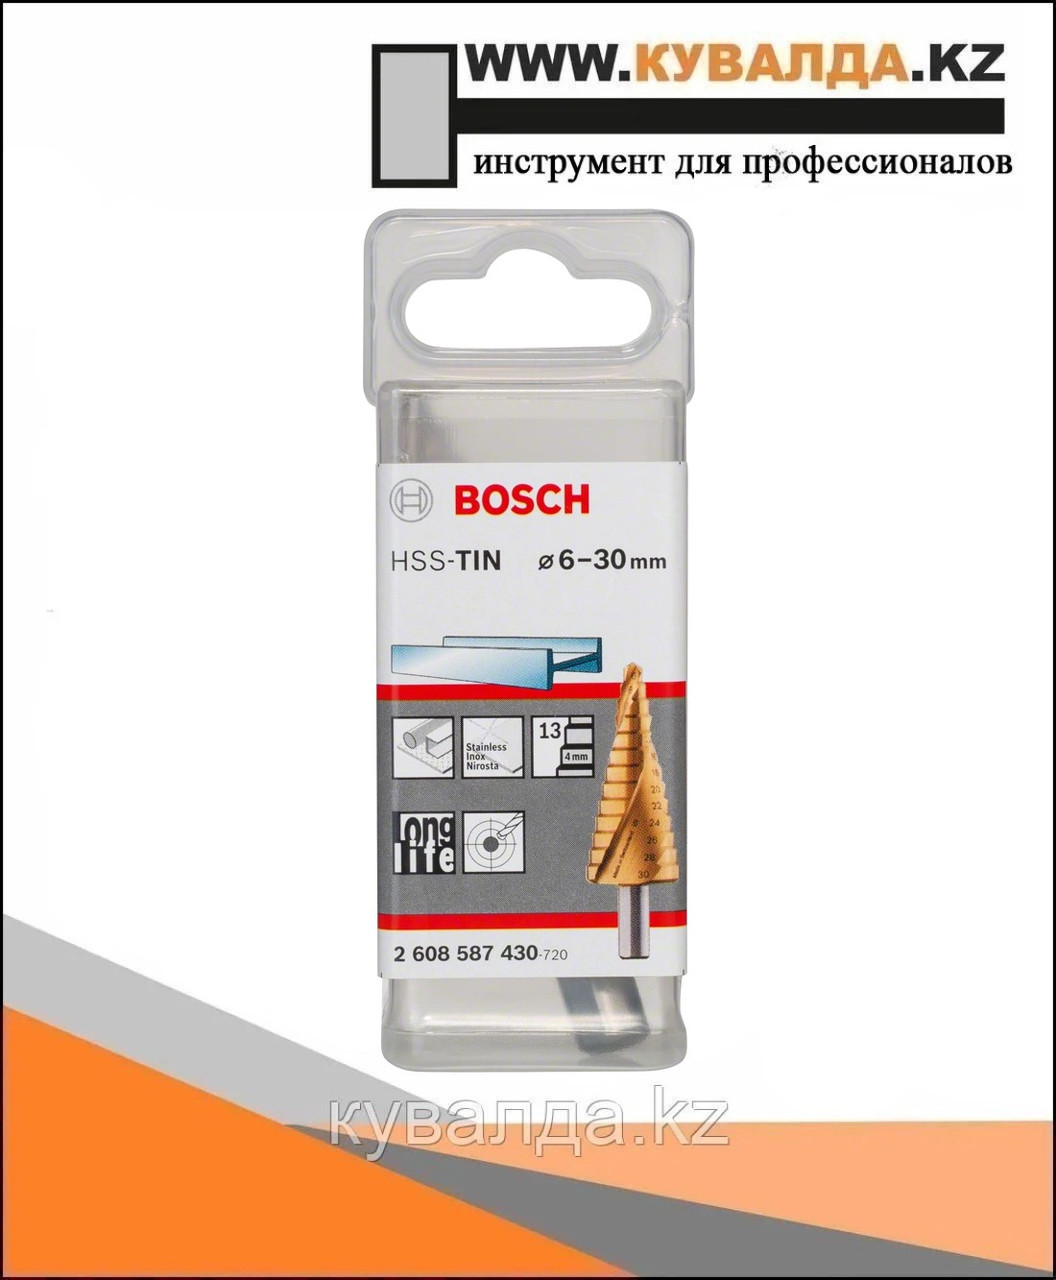 Bosch Ступ сверло HSS-TiN 5 ступ 4-12 мм